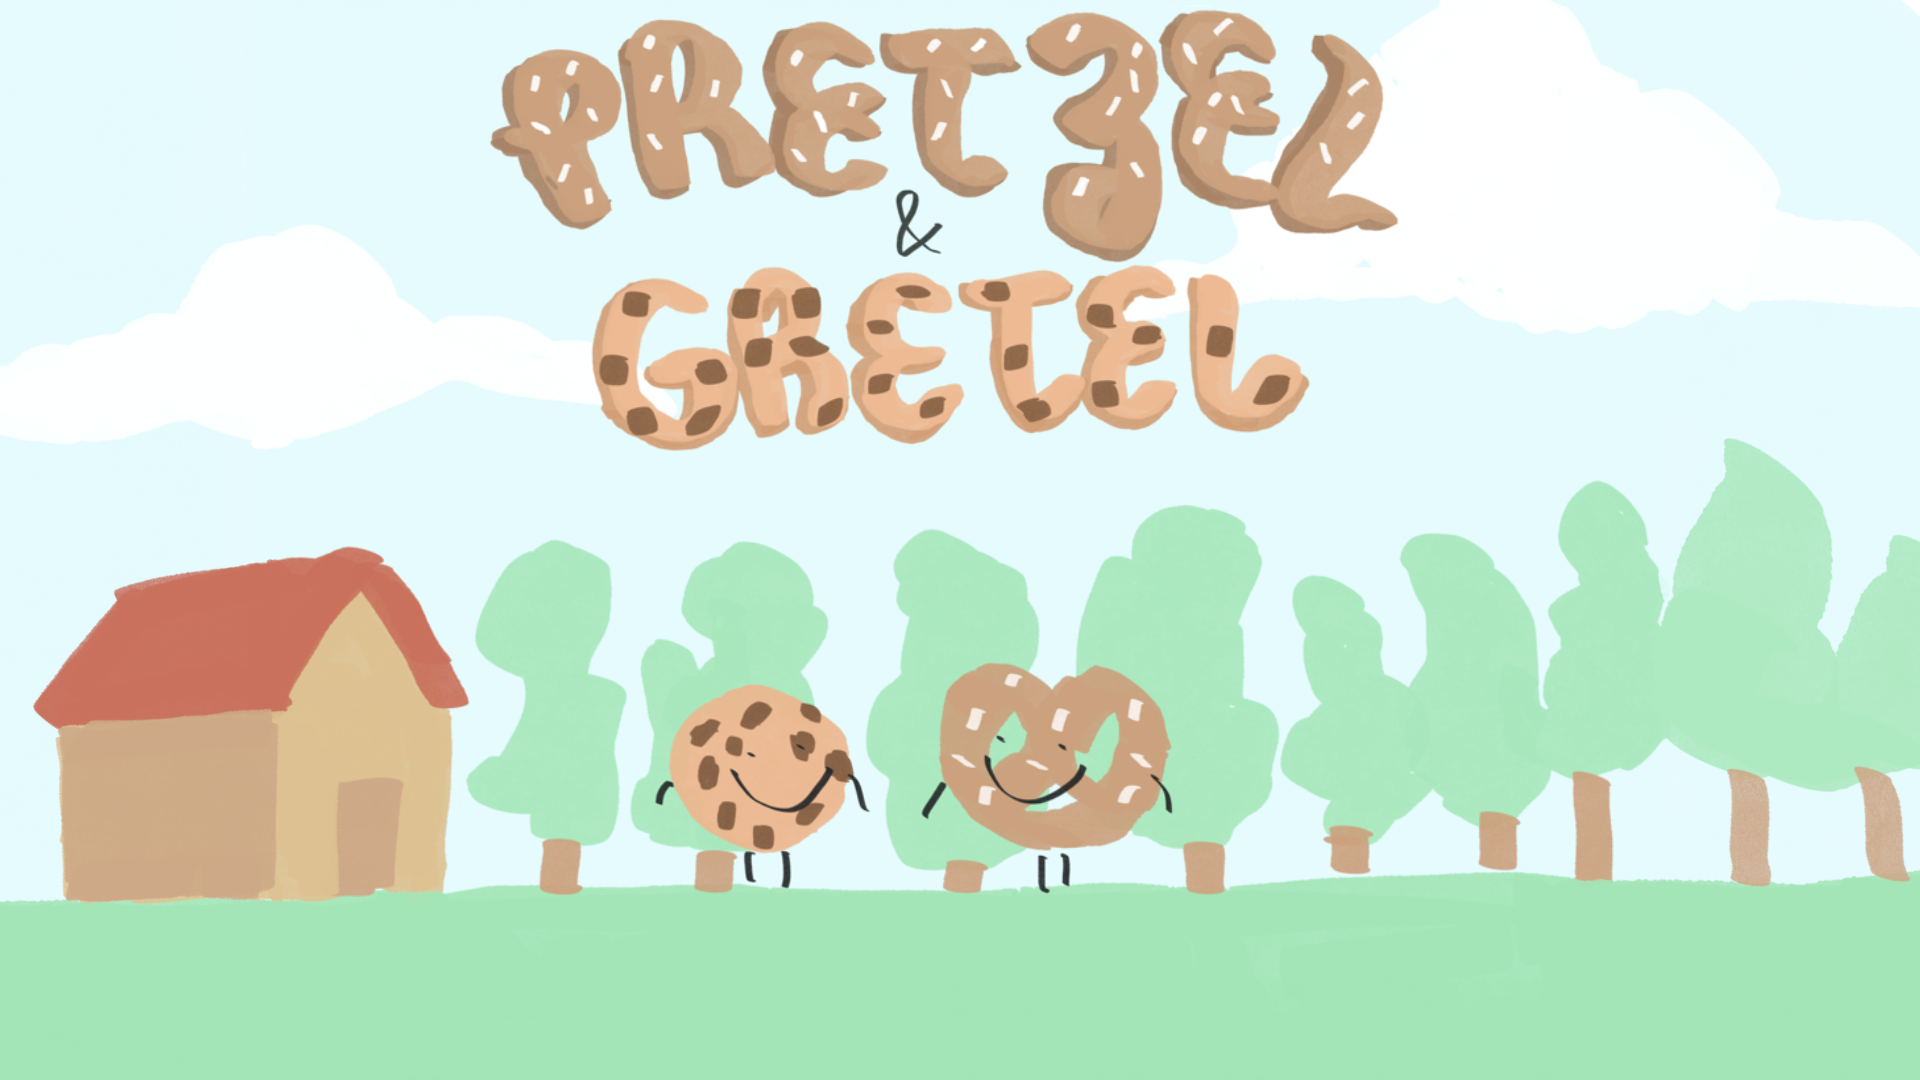 Pretzel and Gretel